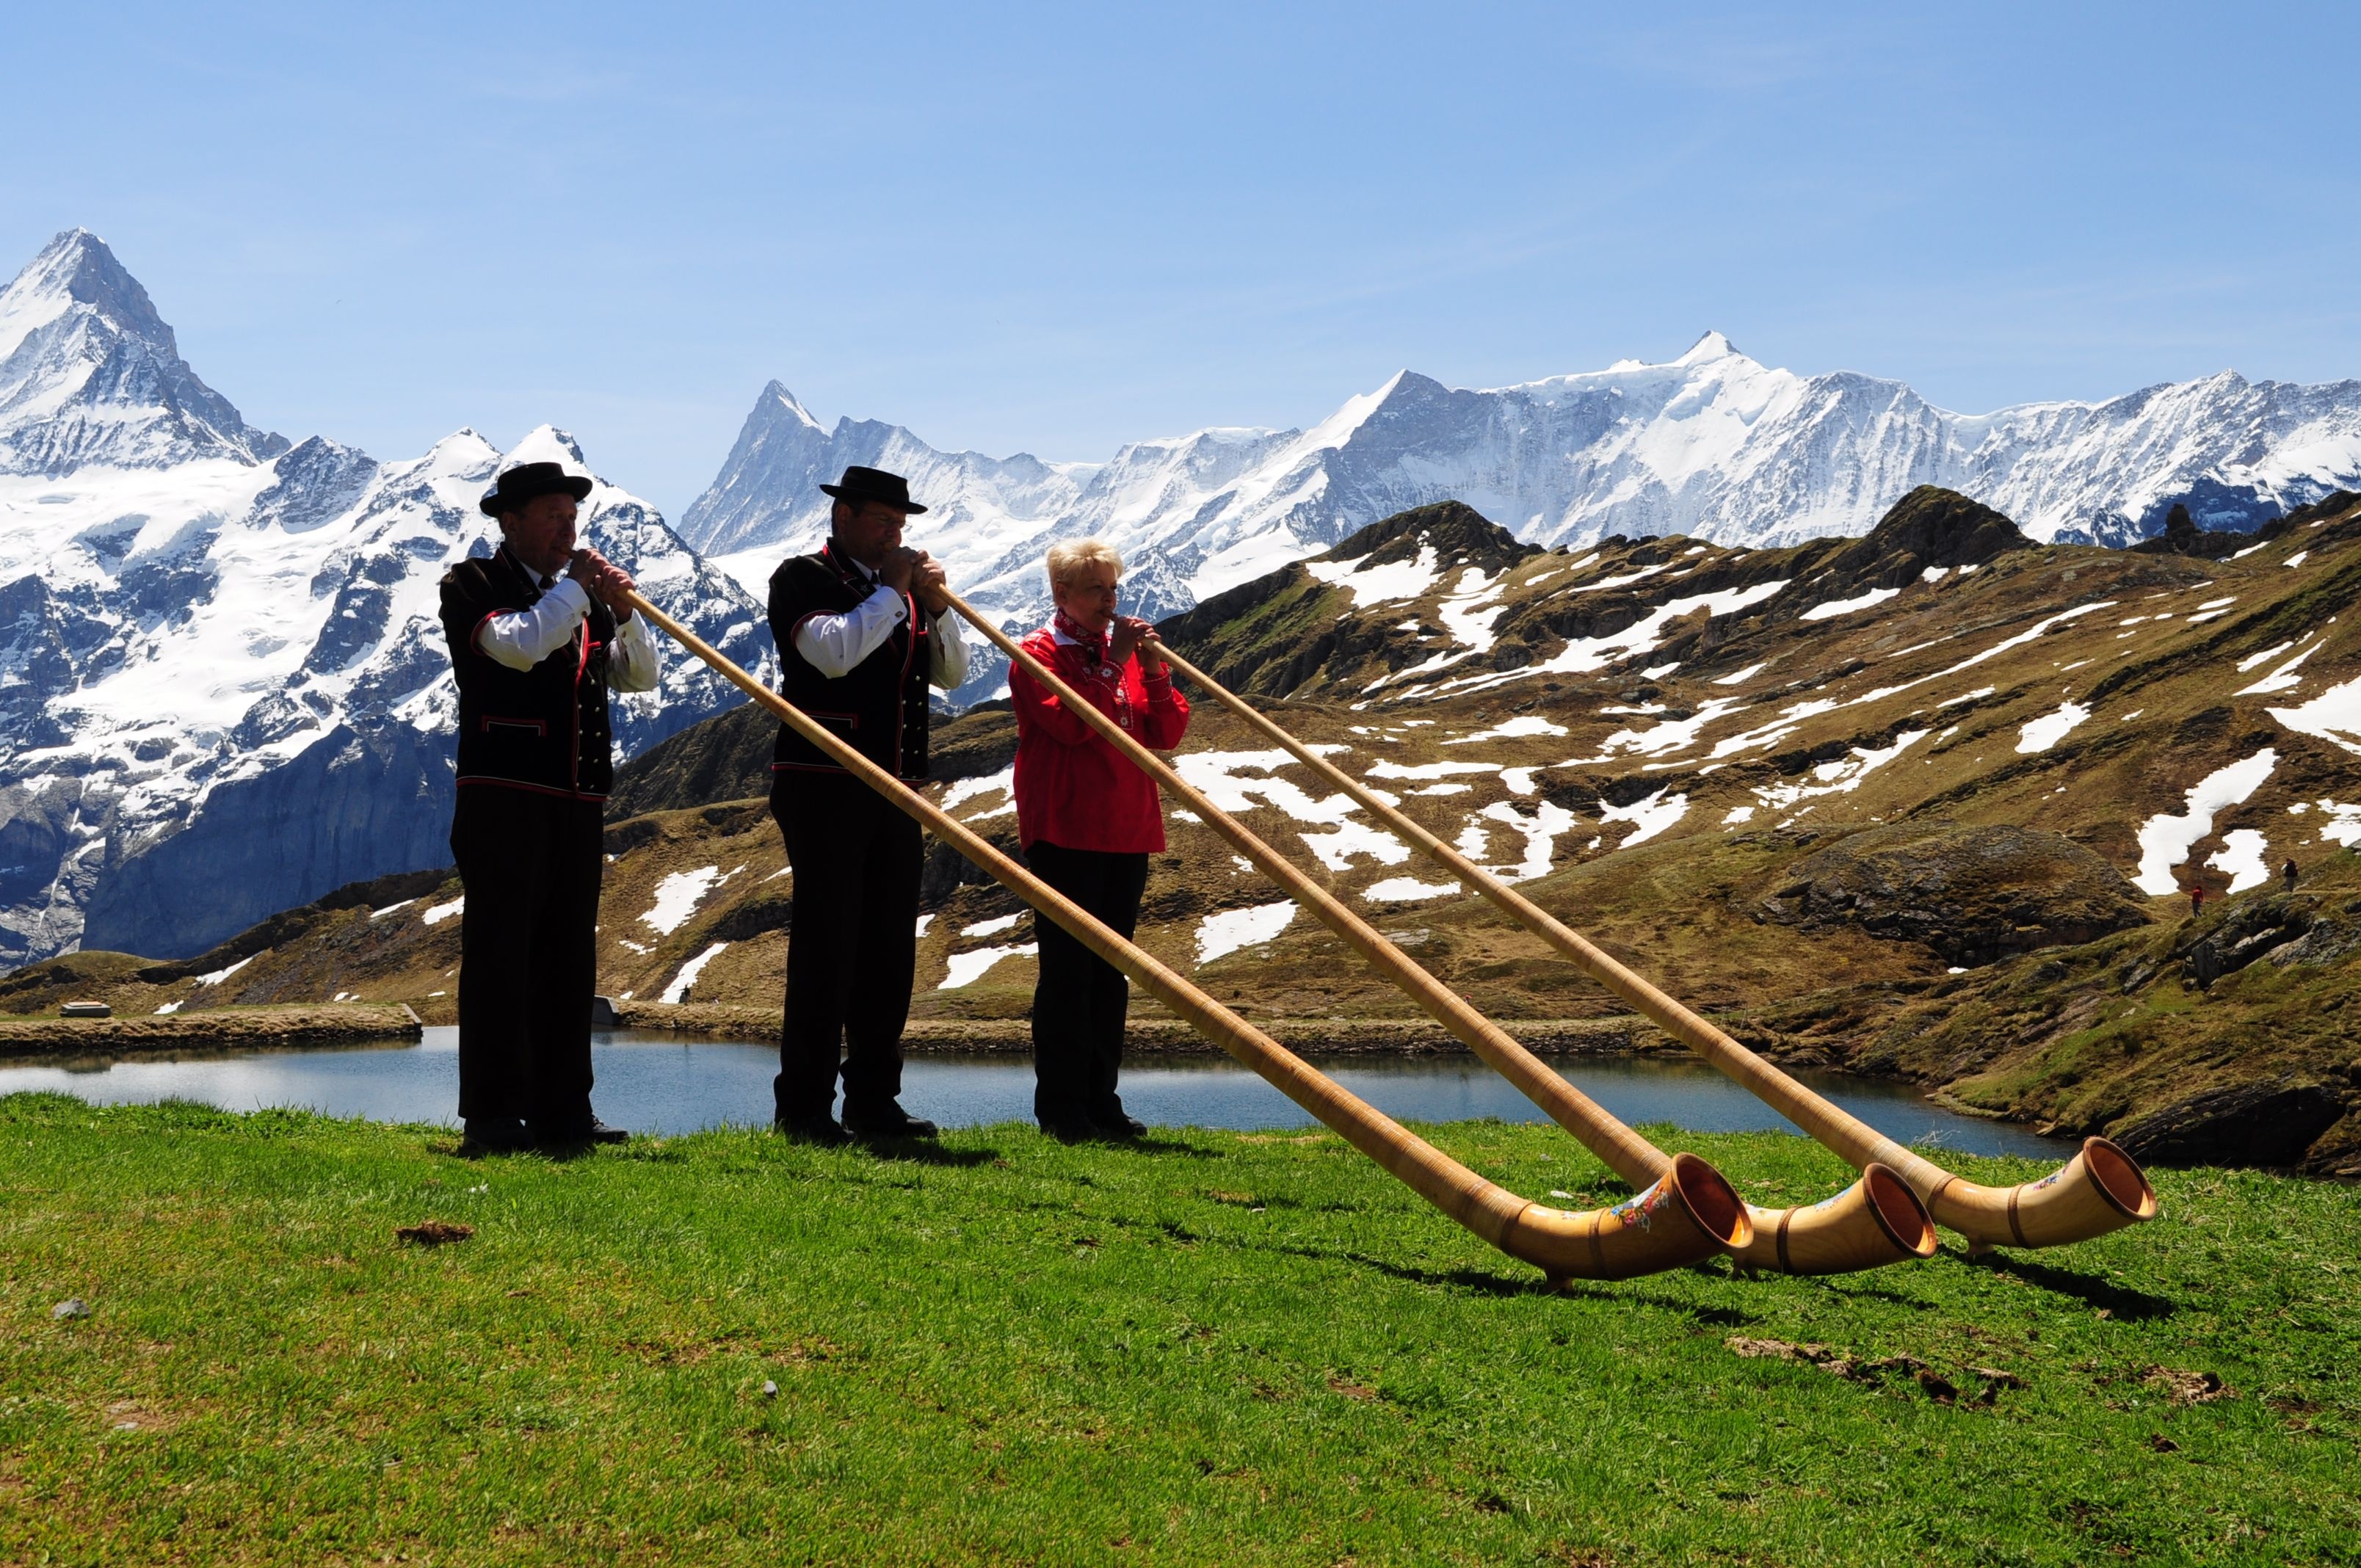 Alphorn: A straight several-meter-long wooden natural horn of conical bore, Balchapsee. 3220x2140 HD Wallpaper.